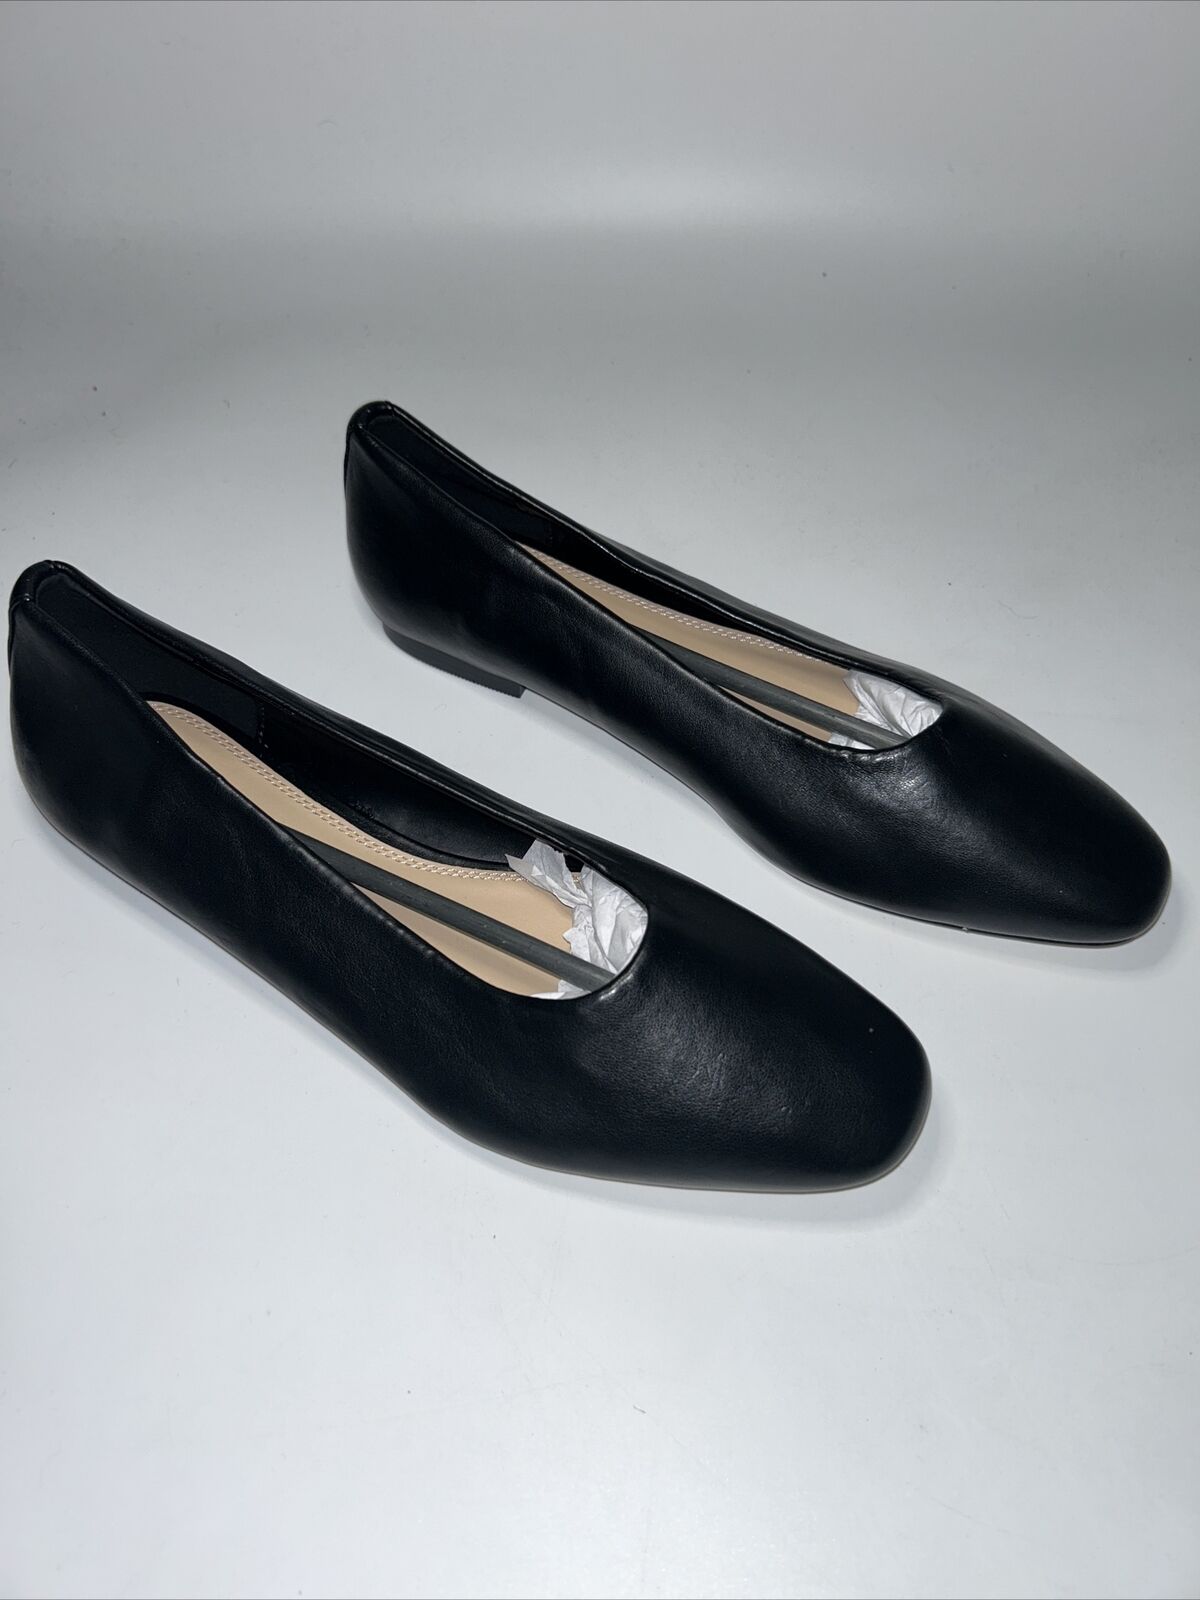 LTS Almond Toe Ballerina Shoes - Black. Size UK 8 **** VS2